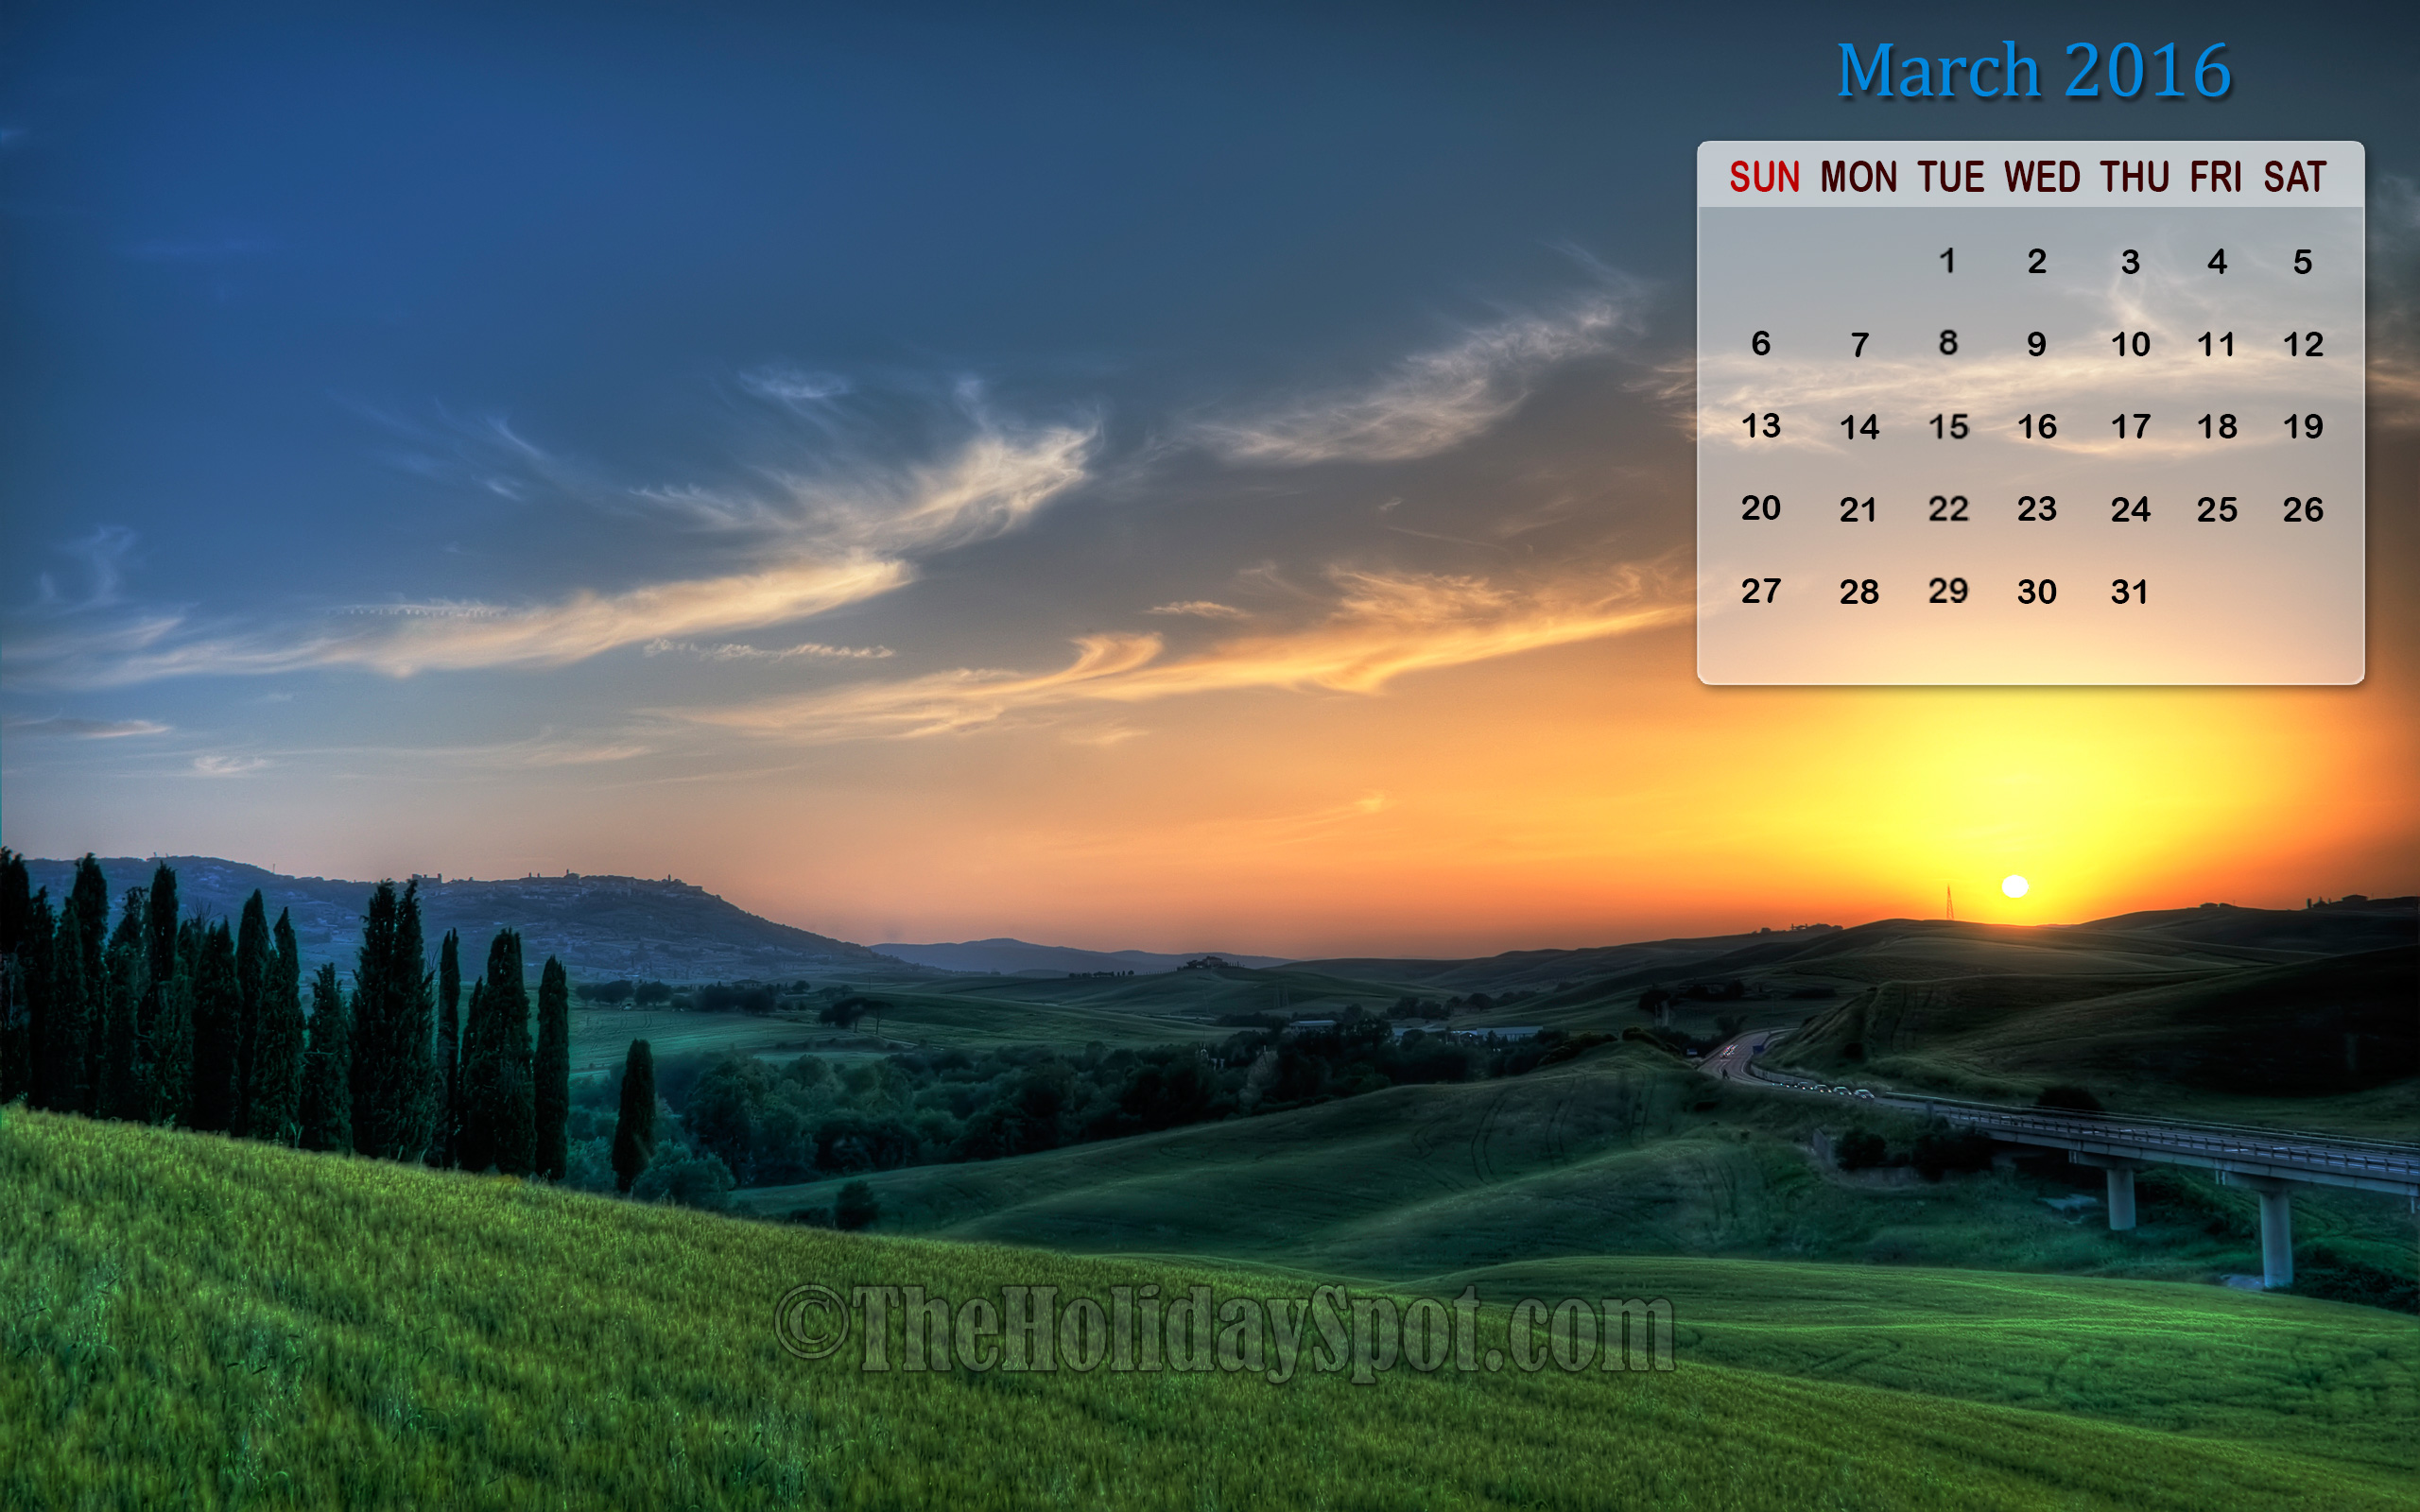  Month wise Calendar Wallpapers Calendar Wallpaper   May 2016